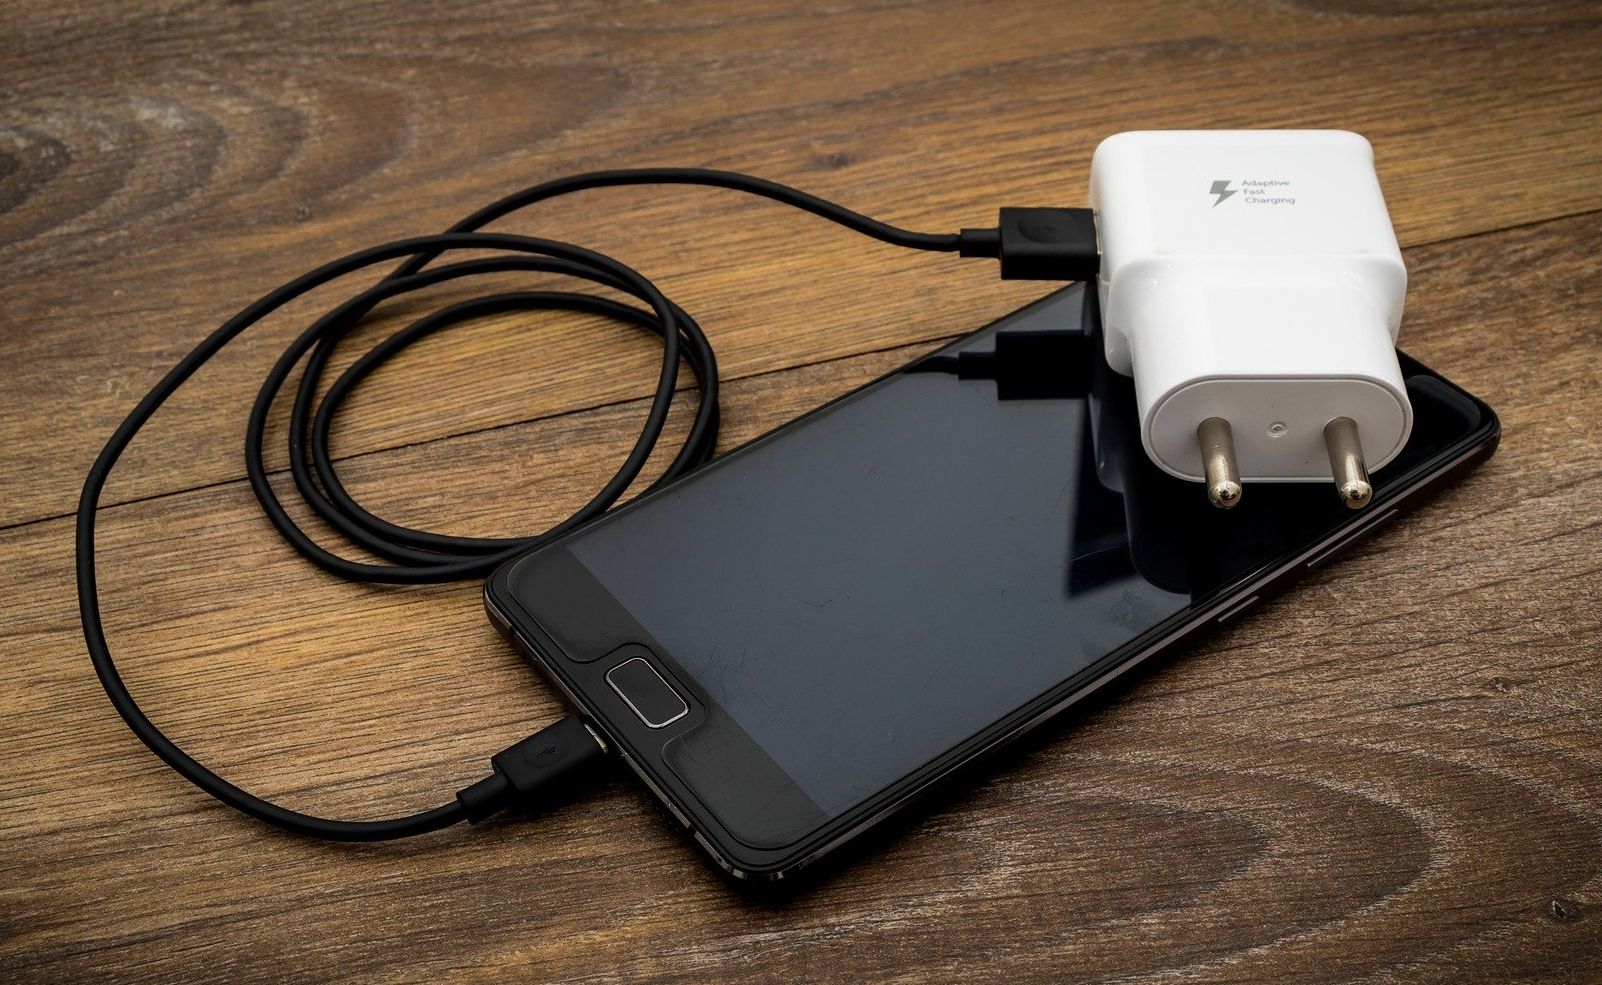 charger and phone - 5 entusiasmanti possibili future tecnologie per smartphone